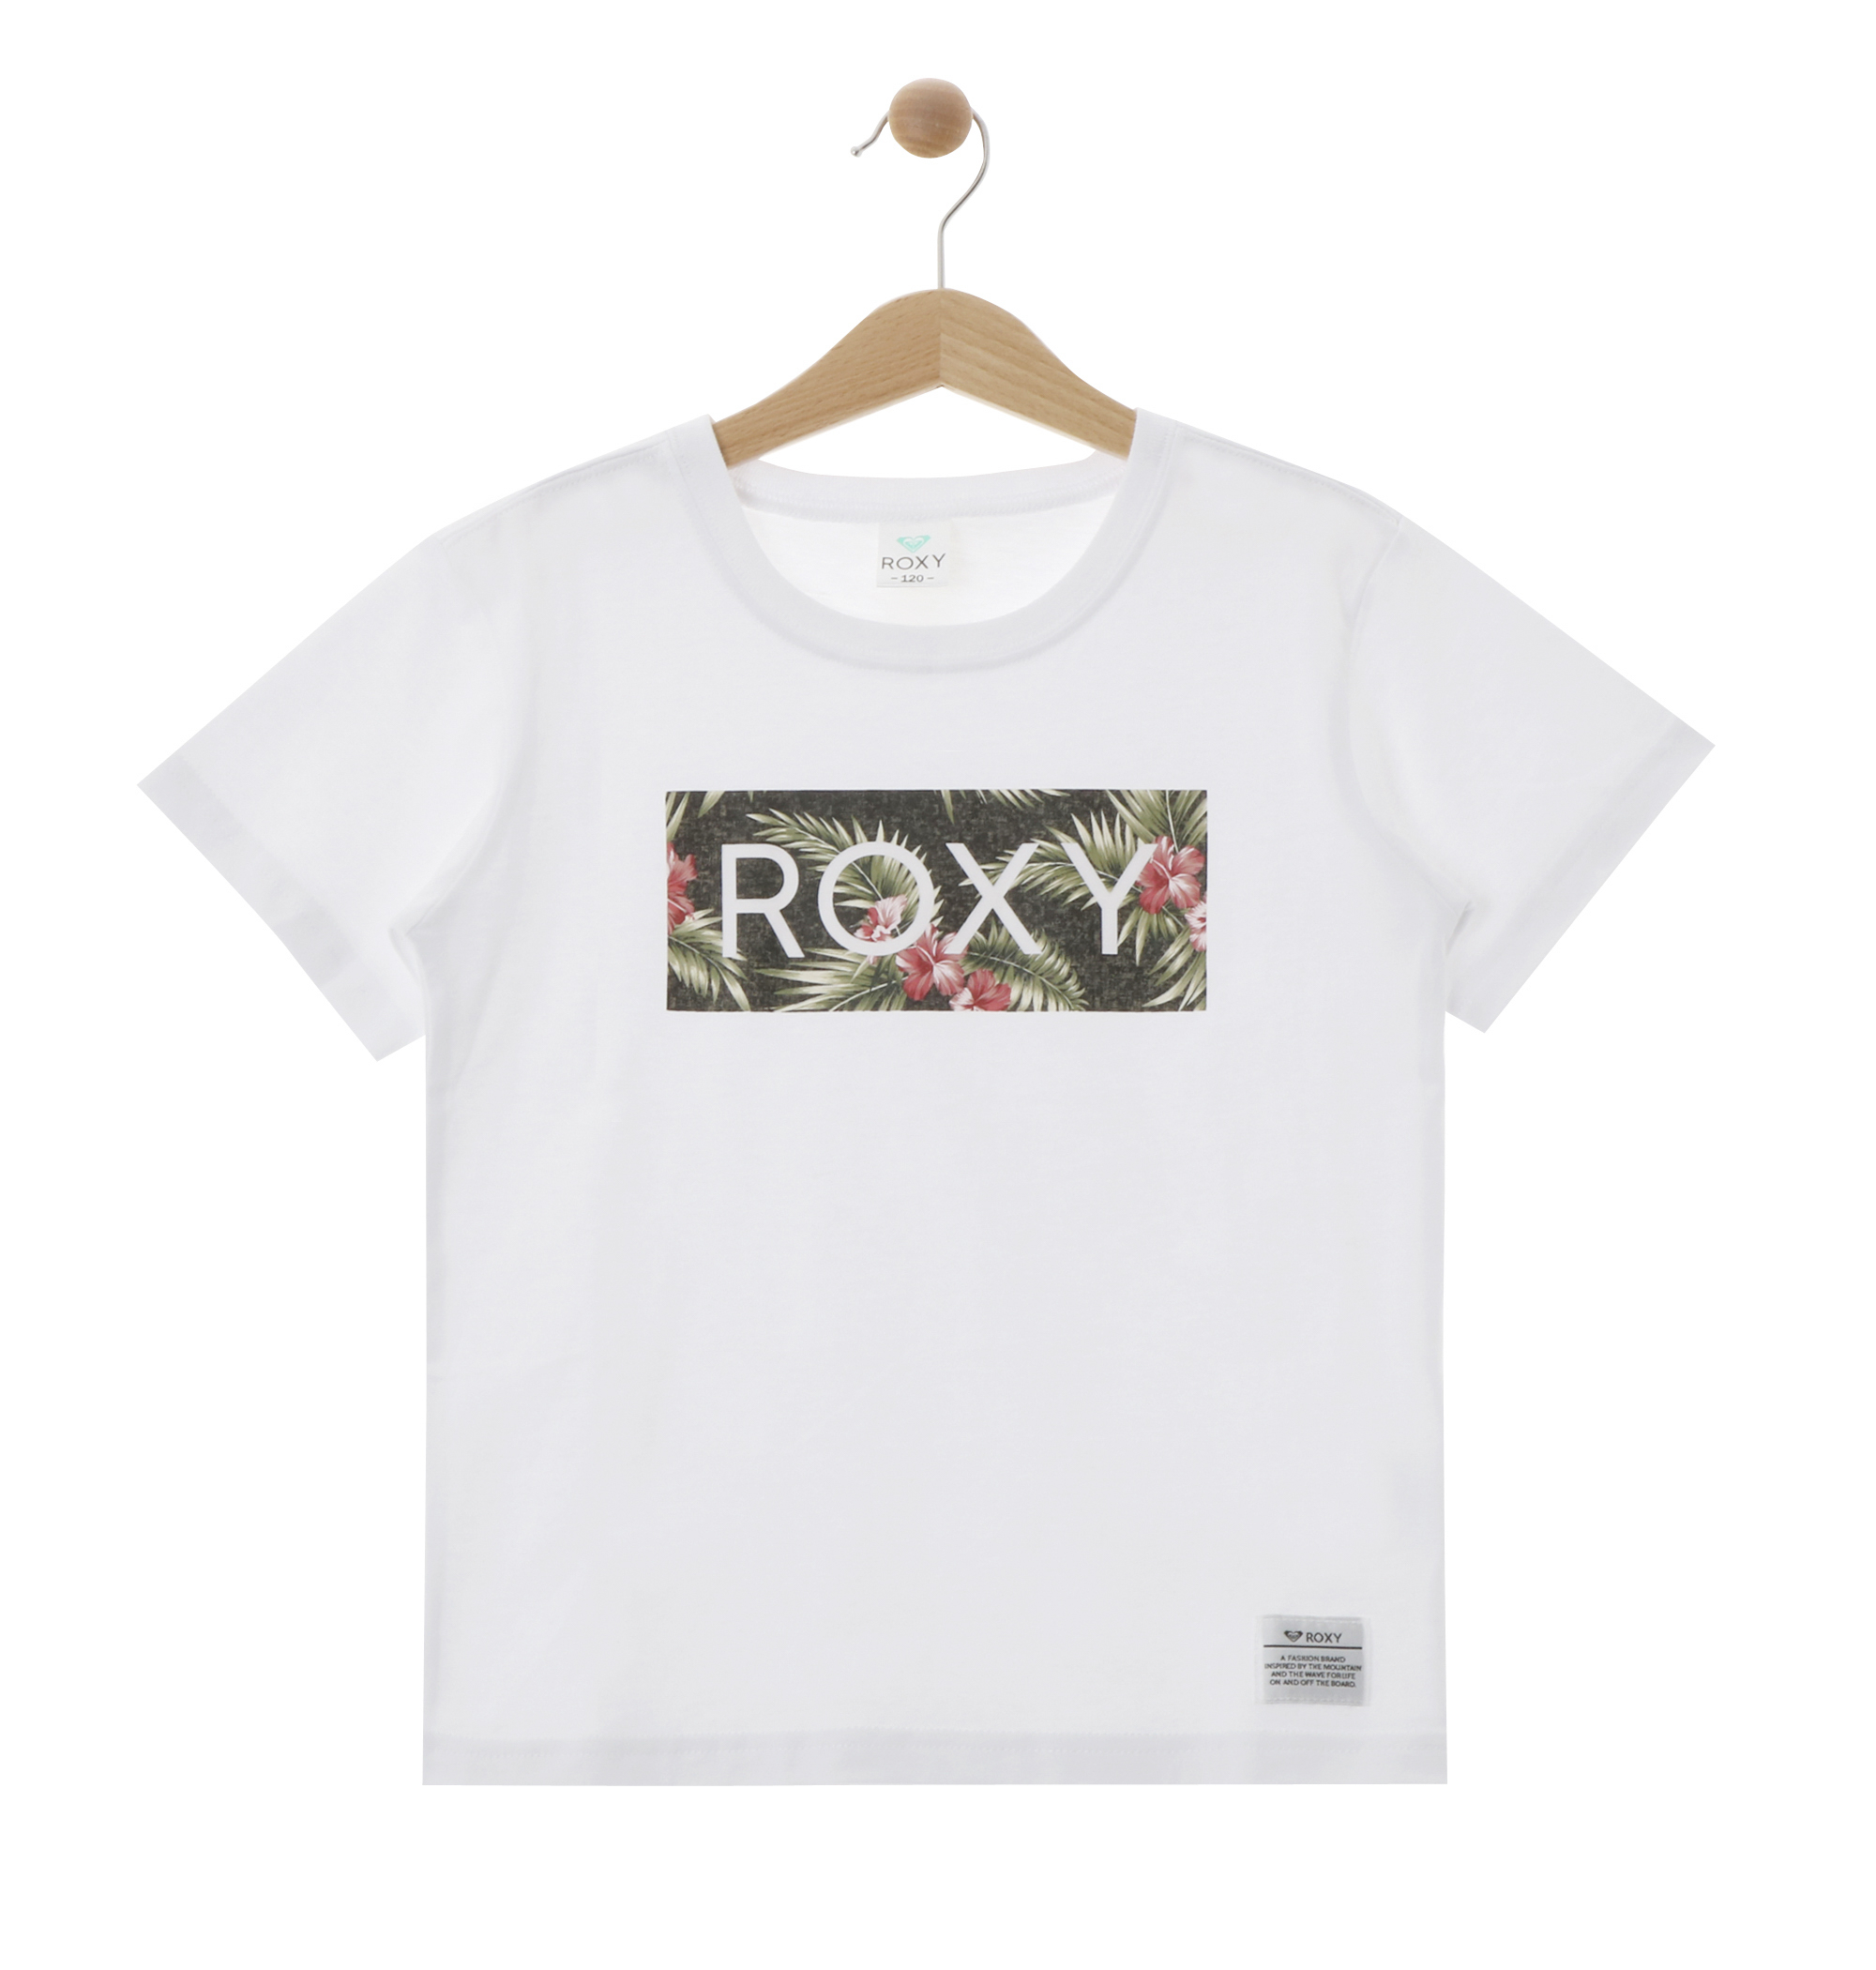 30%OFF！＜Roxy＞MINI TROPICAL FOREST ROXY ボタニカル柄にロゴを重ねたレクタングルプリントの半袖Tシャツ画像